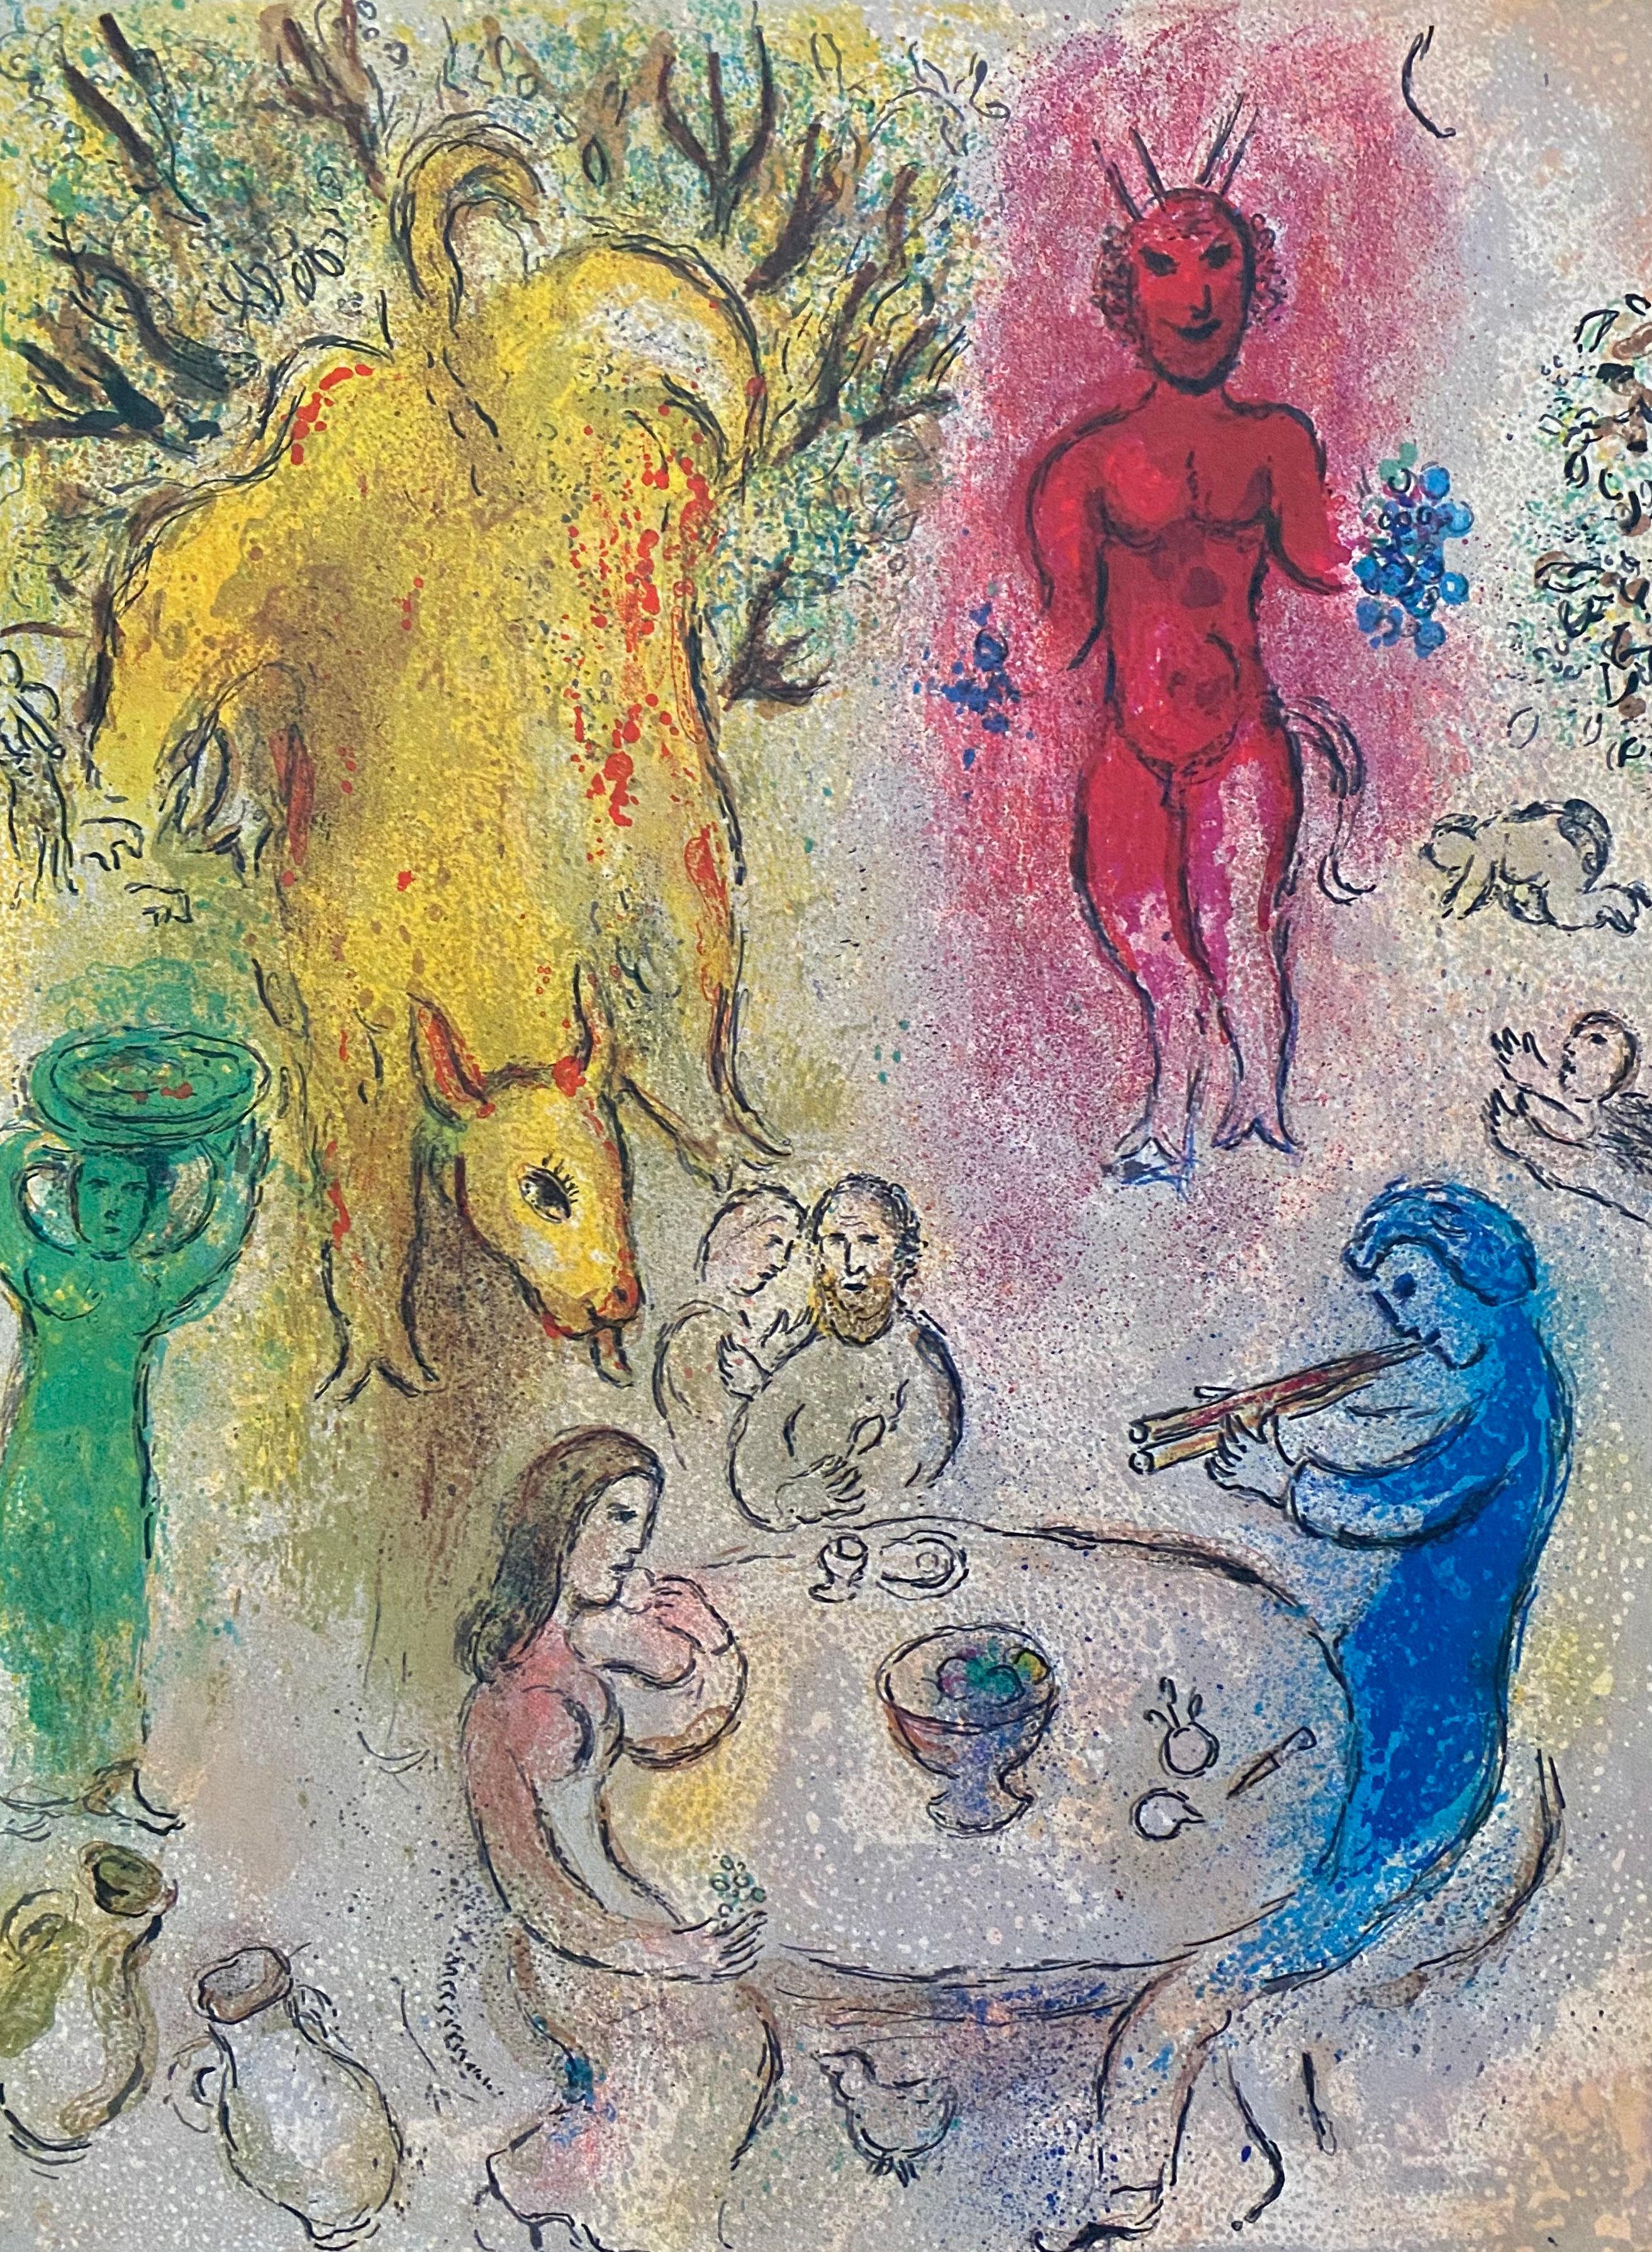 Chagall, Pan’s Banquet (Daphnis et Chloé) (after)